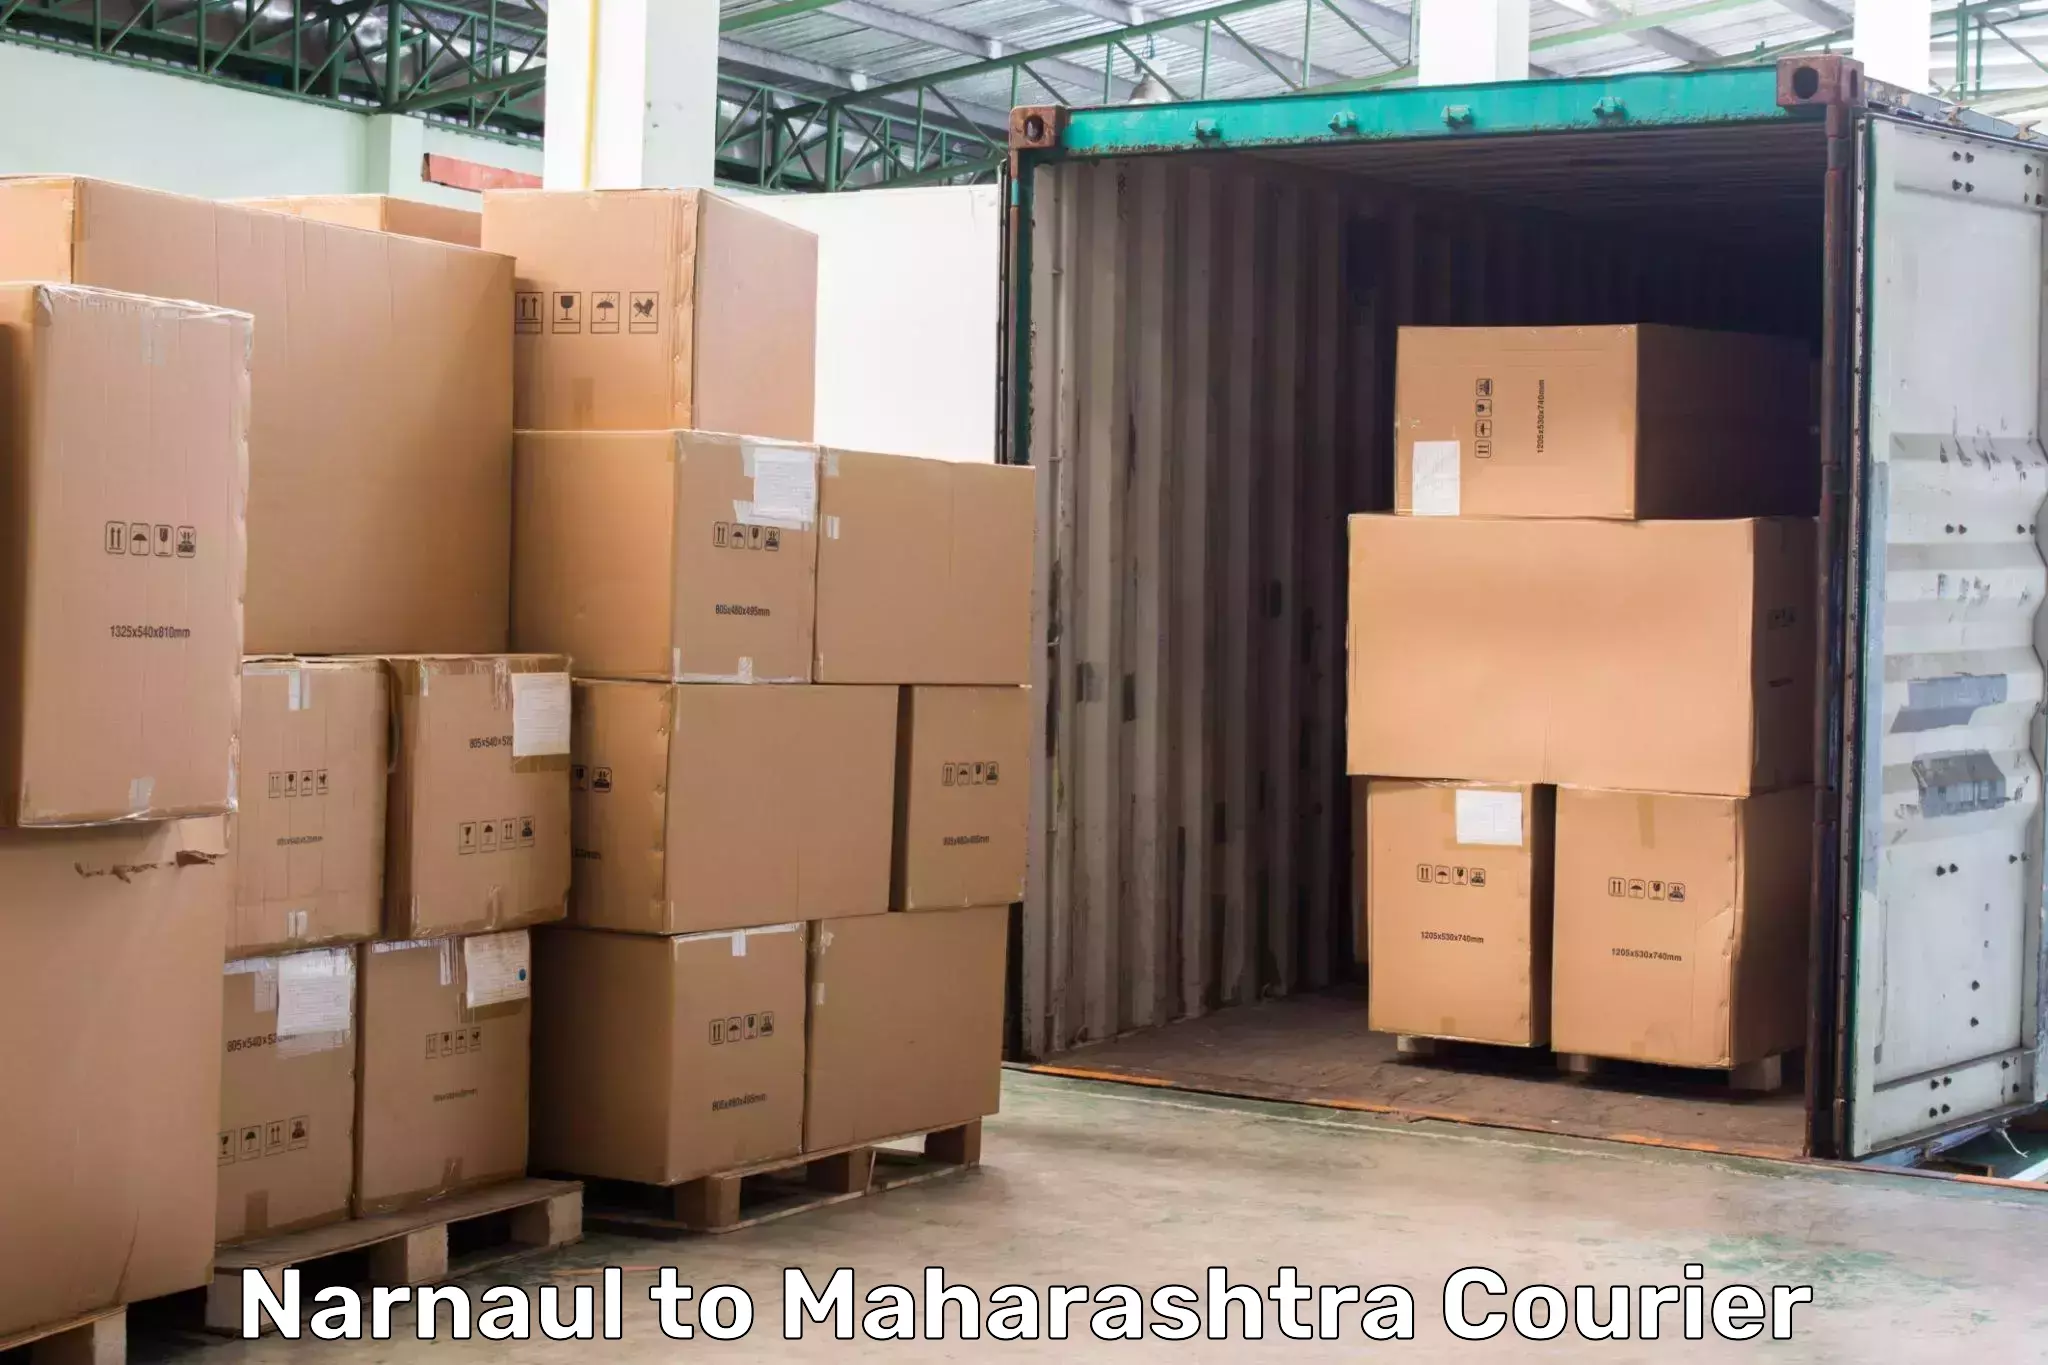 Subscription-based courier Narnaul to Maharashtra